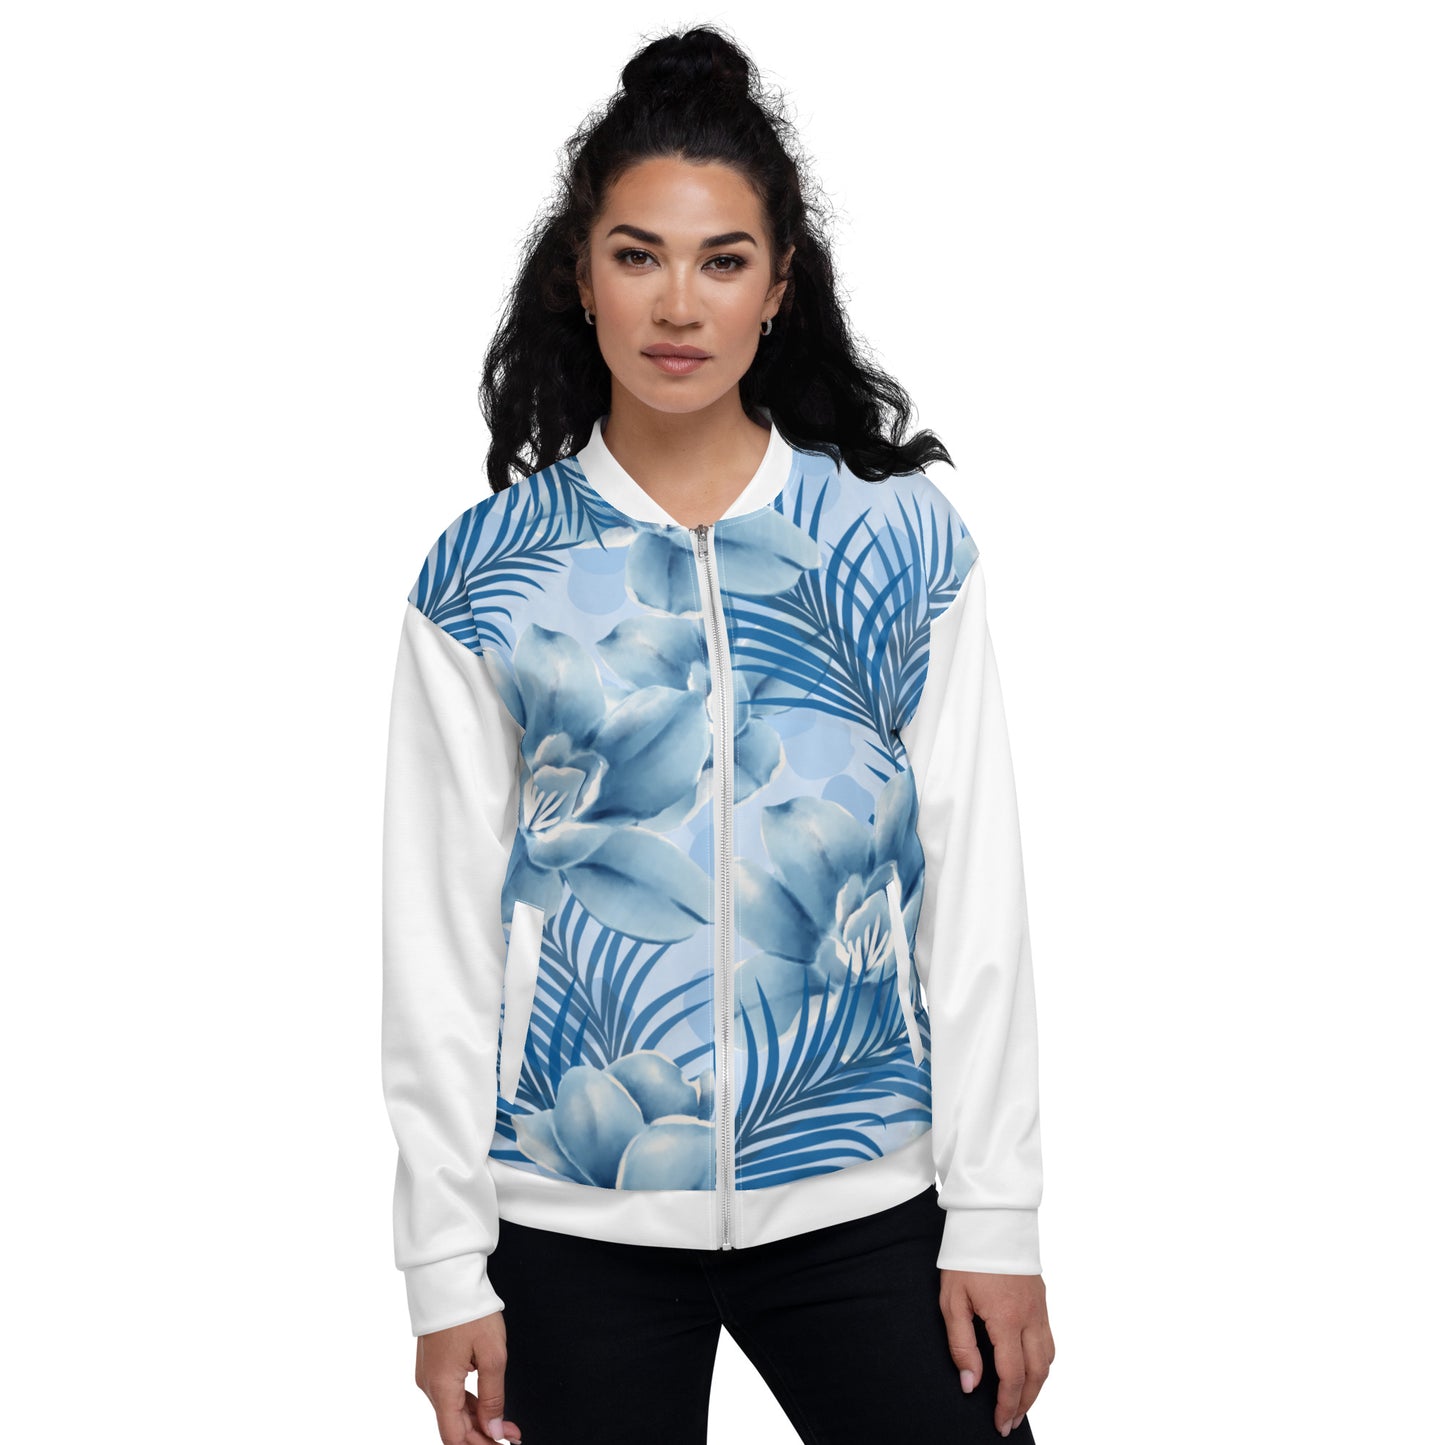 Women Bomber Jacket With Zipper Premium Quality Blue Fire Bird Floral Design by IOBI Original Apparel